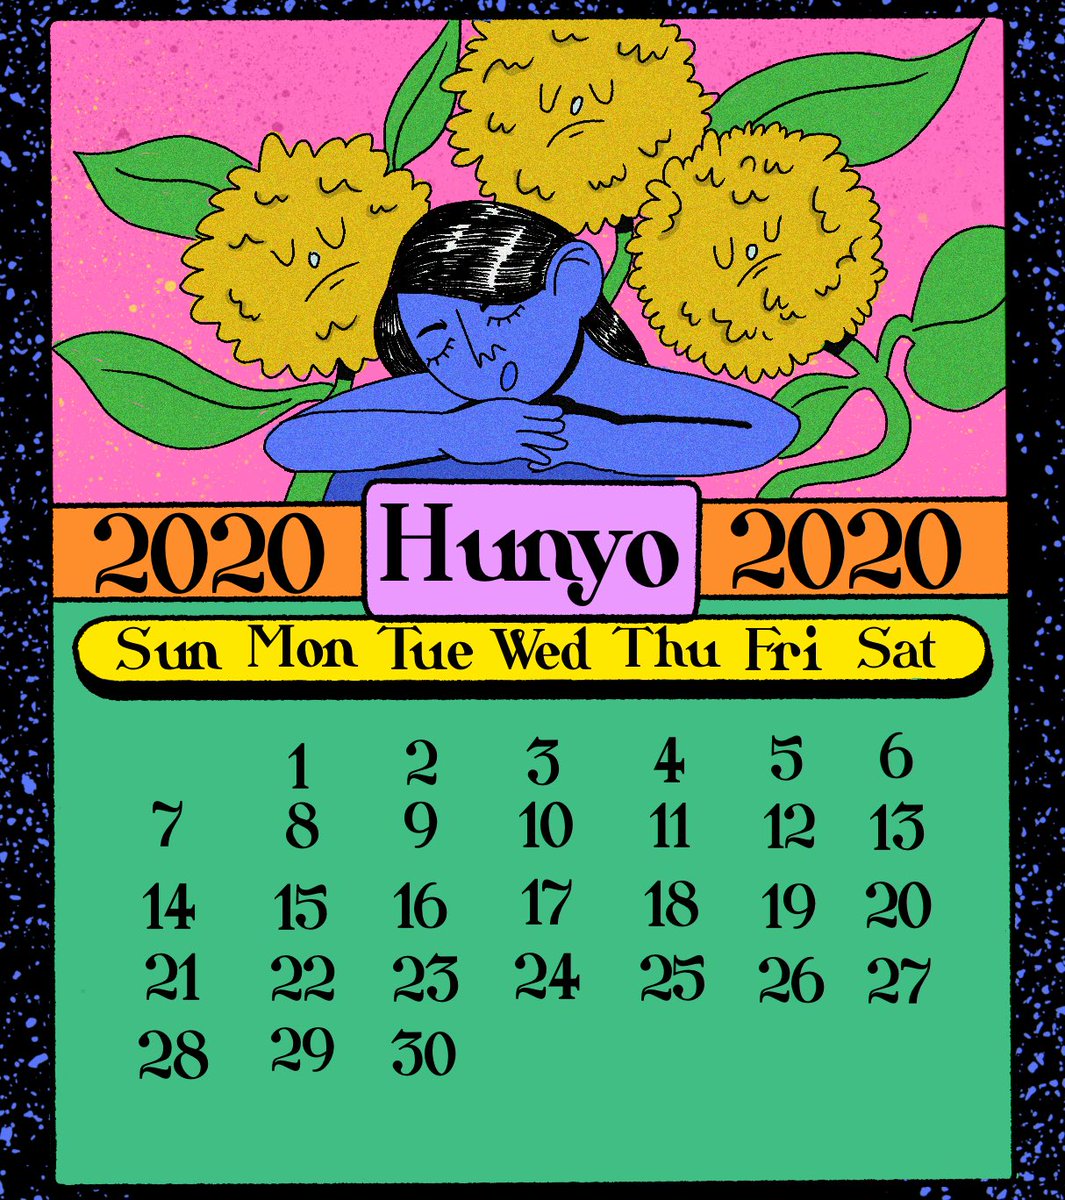 June 2020 calendar ??? 
Magpapahinga muna ?
#artph 